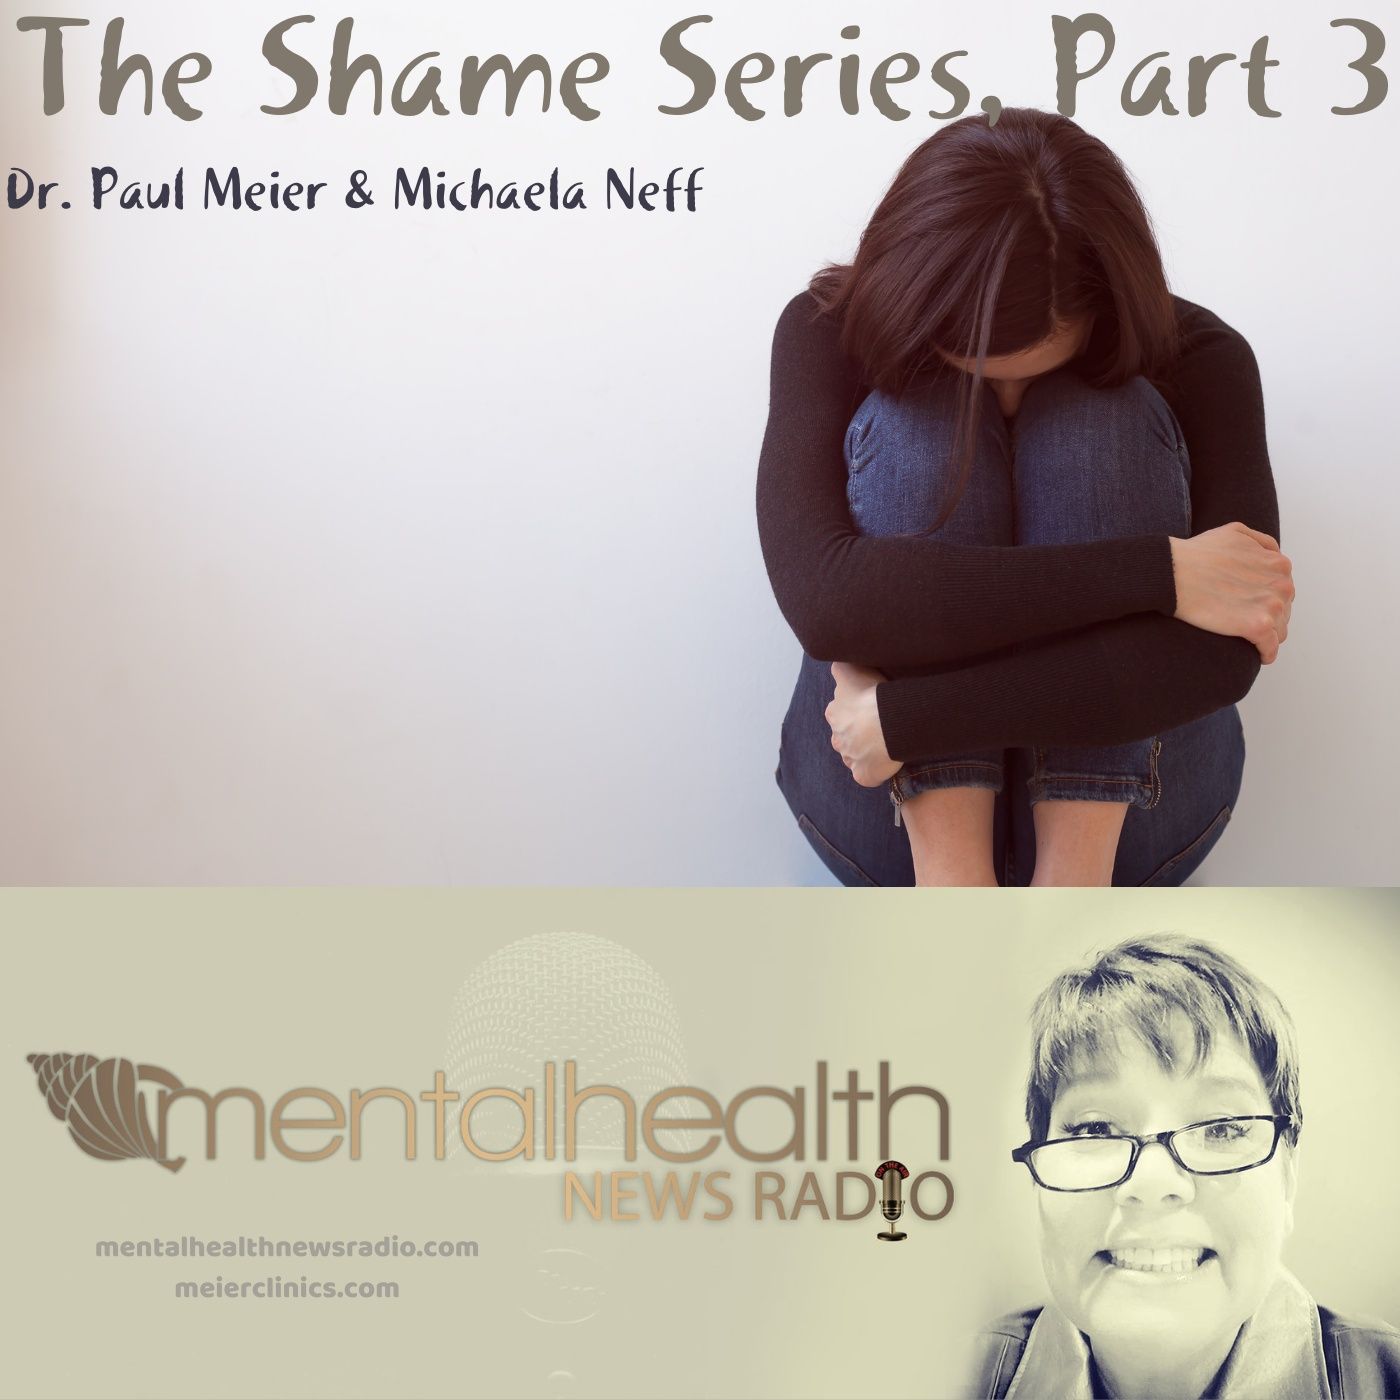 Mental Health News Radio - The Shame Series with Dr. Paul Meier Part 3